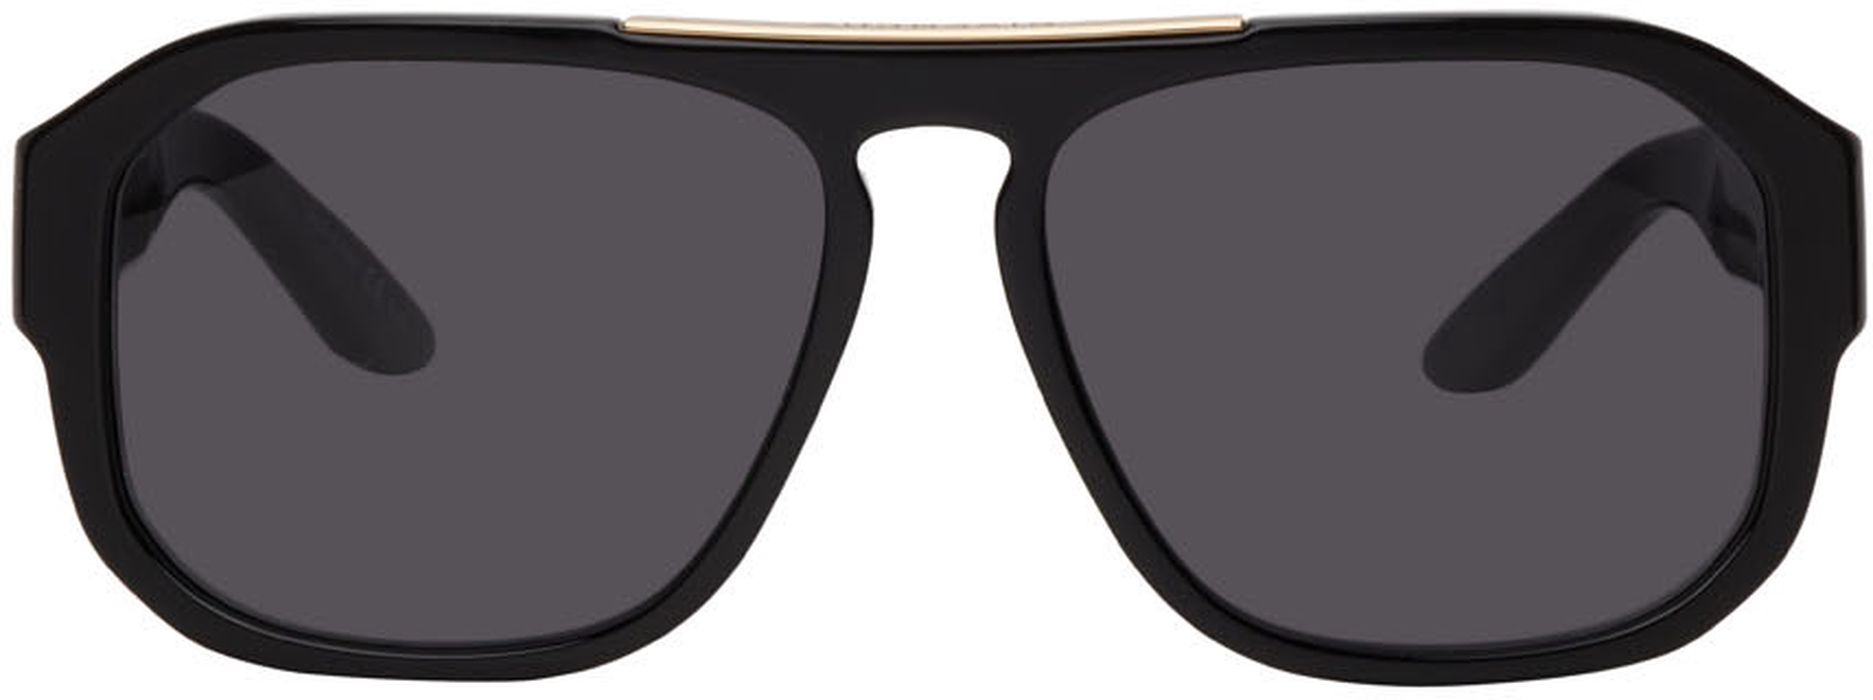 Givenchy Black GV Hinge Aviator Sunglasses